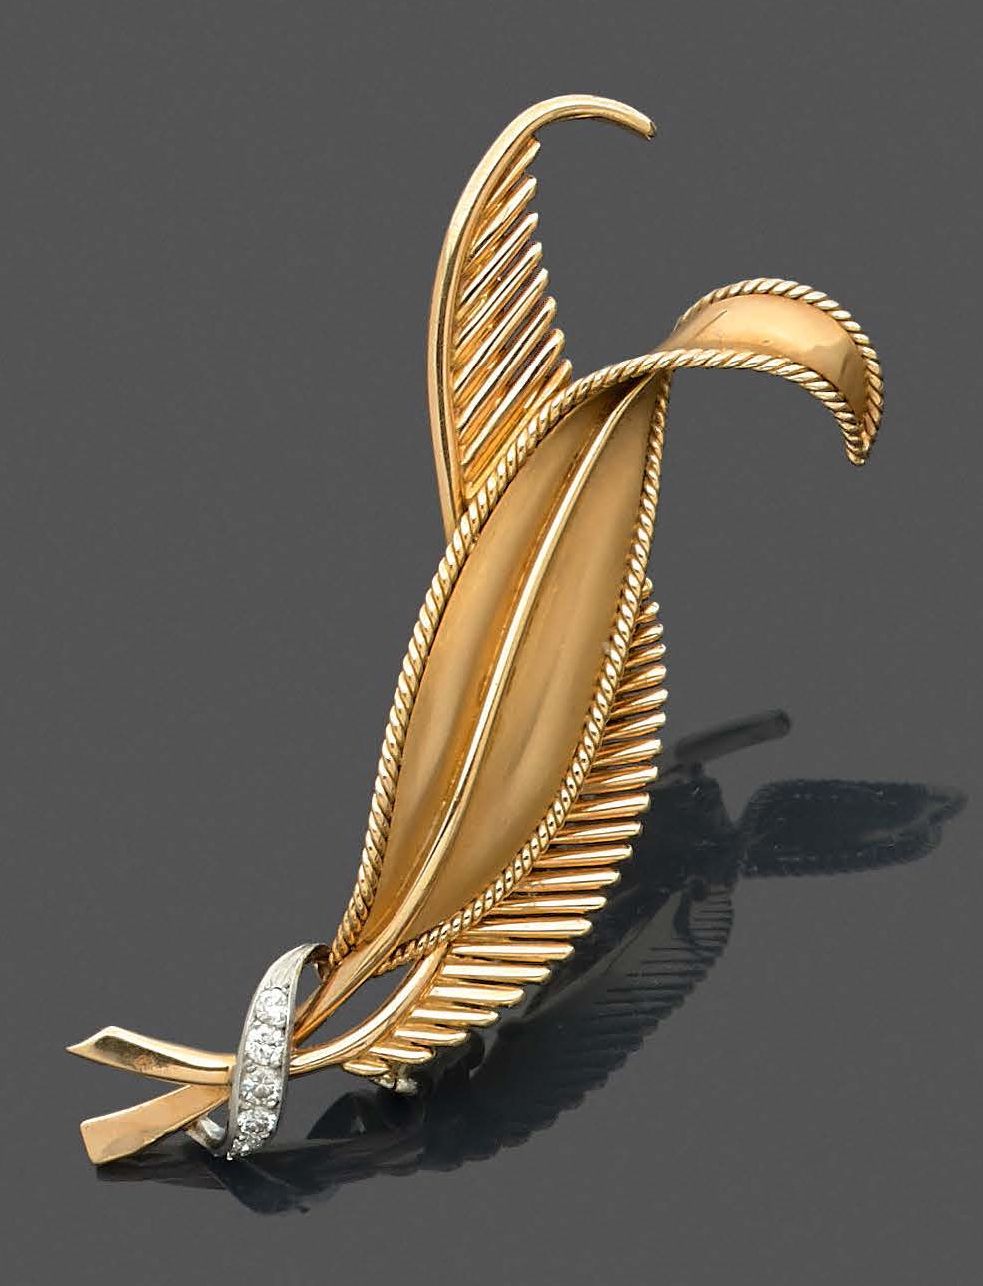 Null 铂金(最小
800‰)和黄金(750‰)的镂空、扭曲和缎面处理的CORSAGE夹 "叶子"，镶嵌了一排明亮式切割的钻石。
大约在1950-60年代。
&hellip;